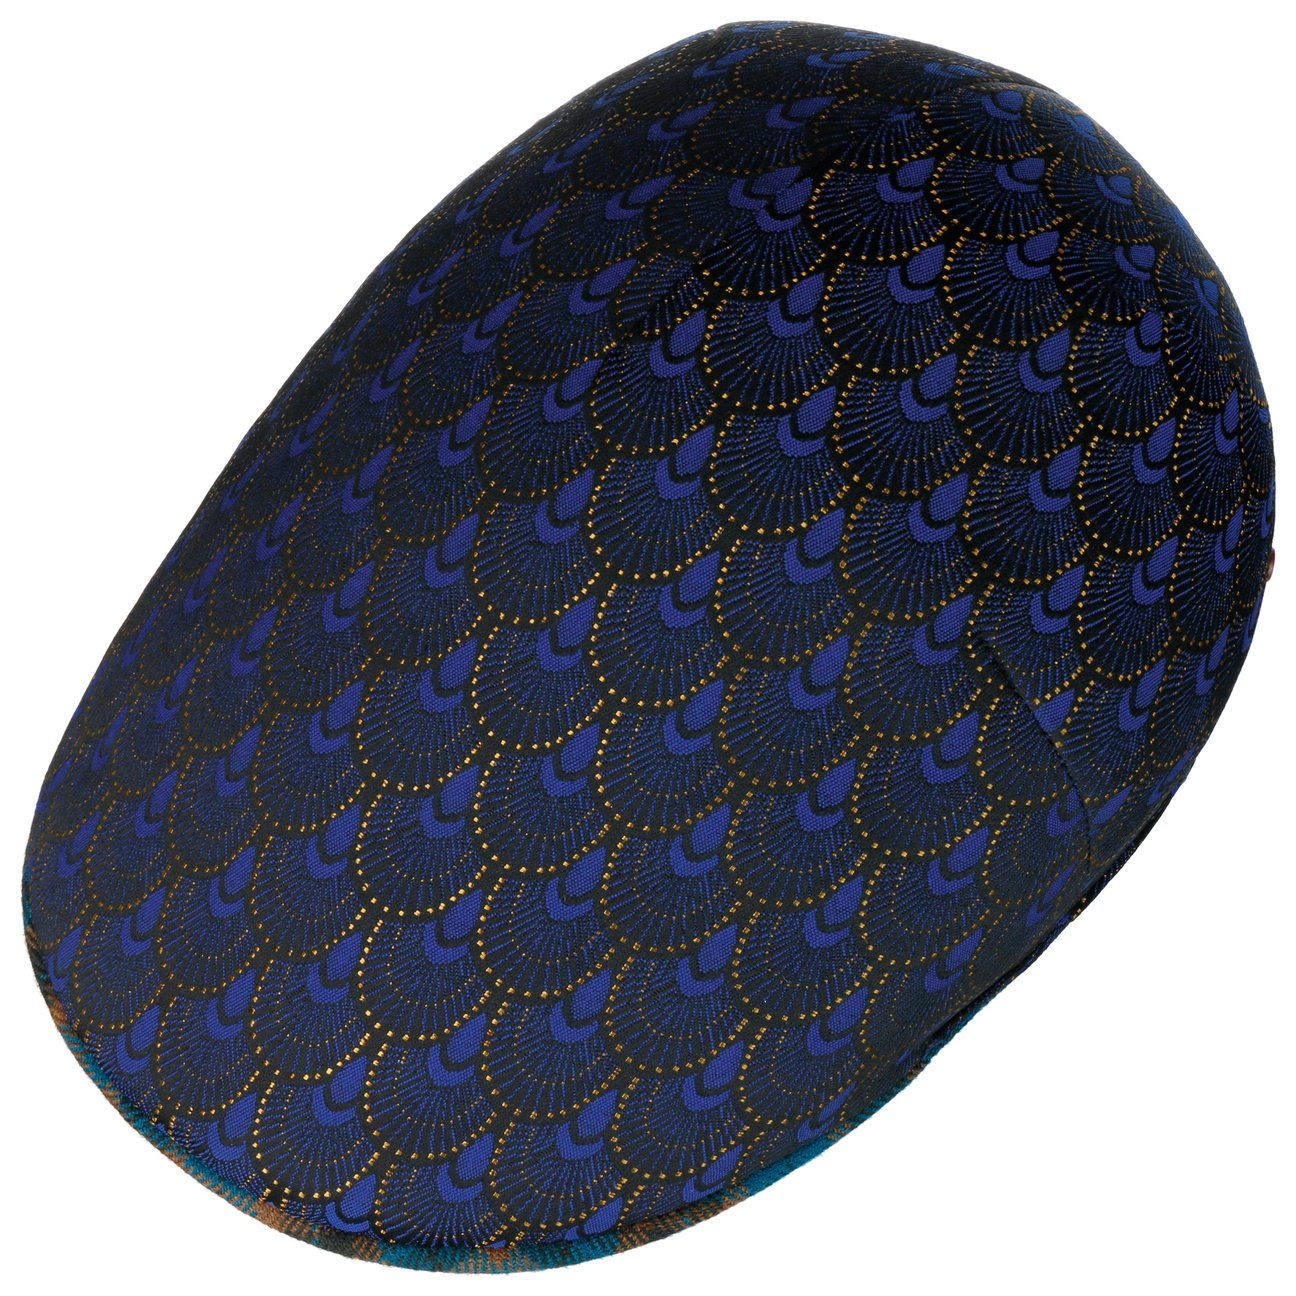 Alfonso D´Este Flat Cap (1-St) Schirmmütze Made in Schirm, Italy mit